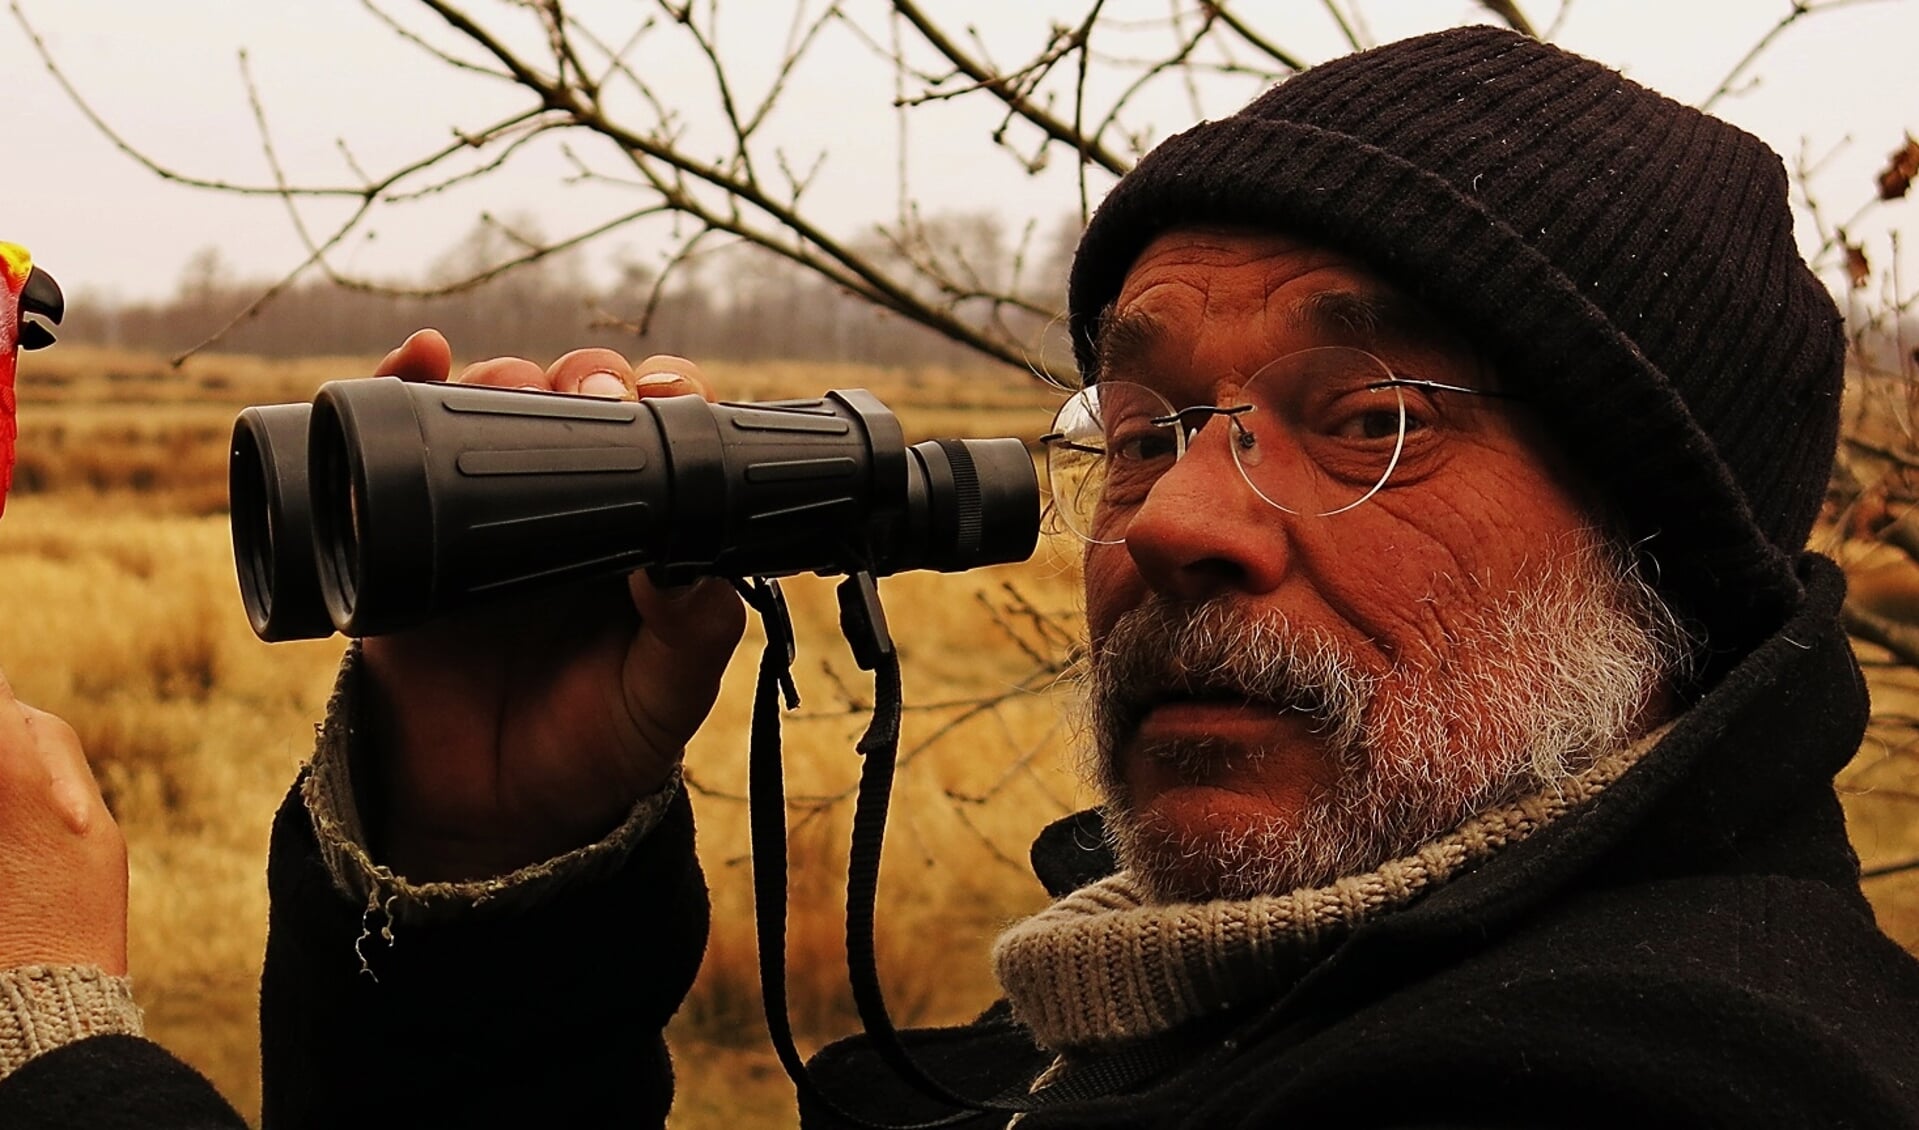 Birdwatcher O.C. Hooymeijer